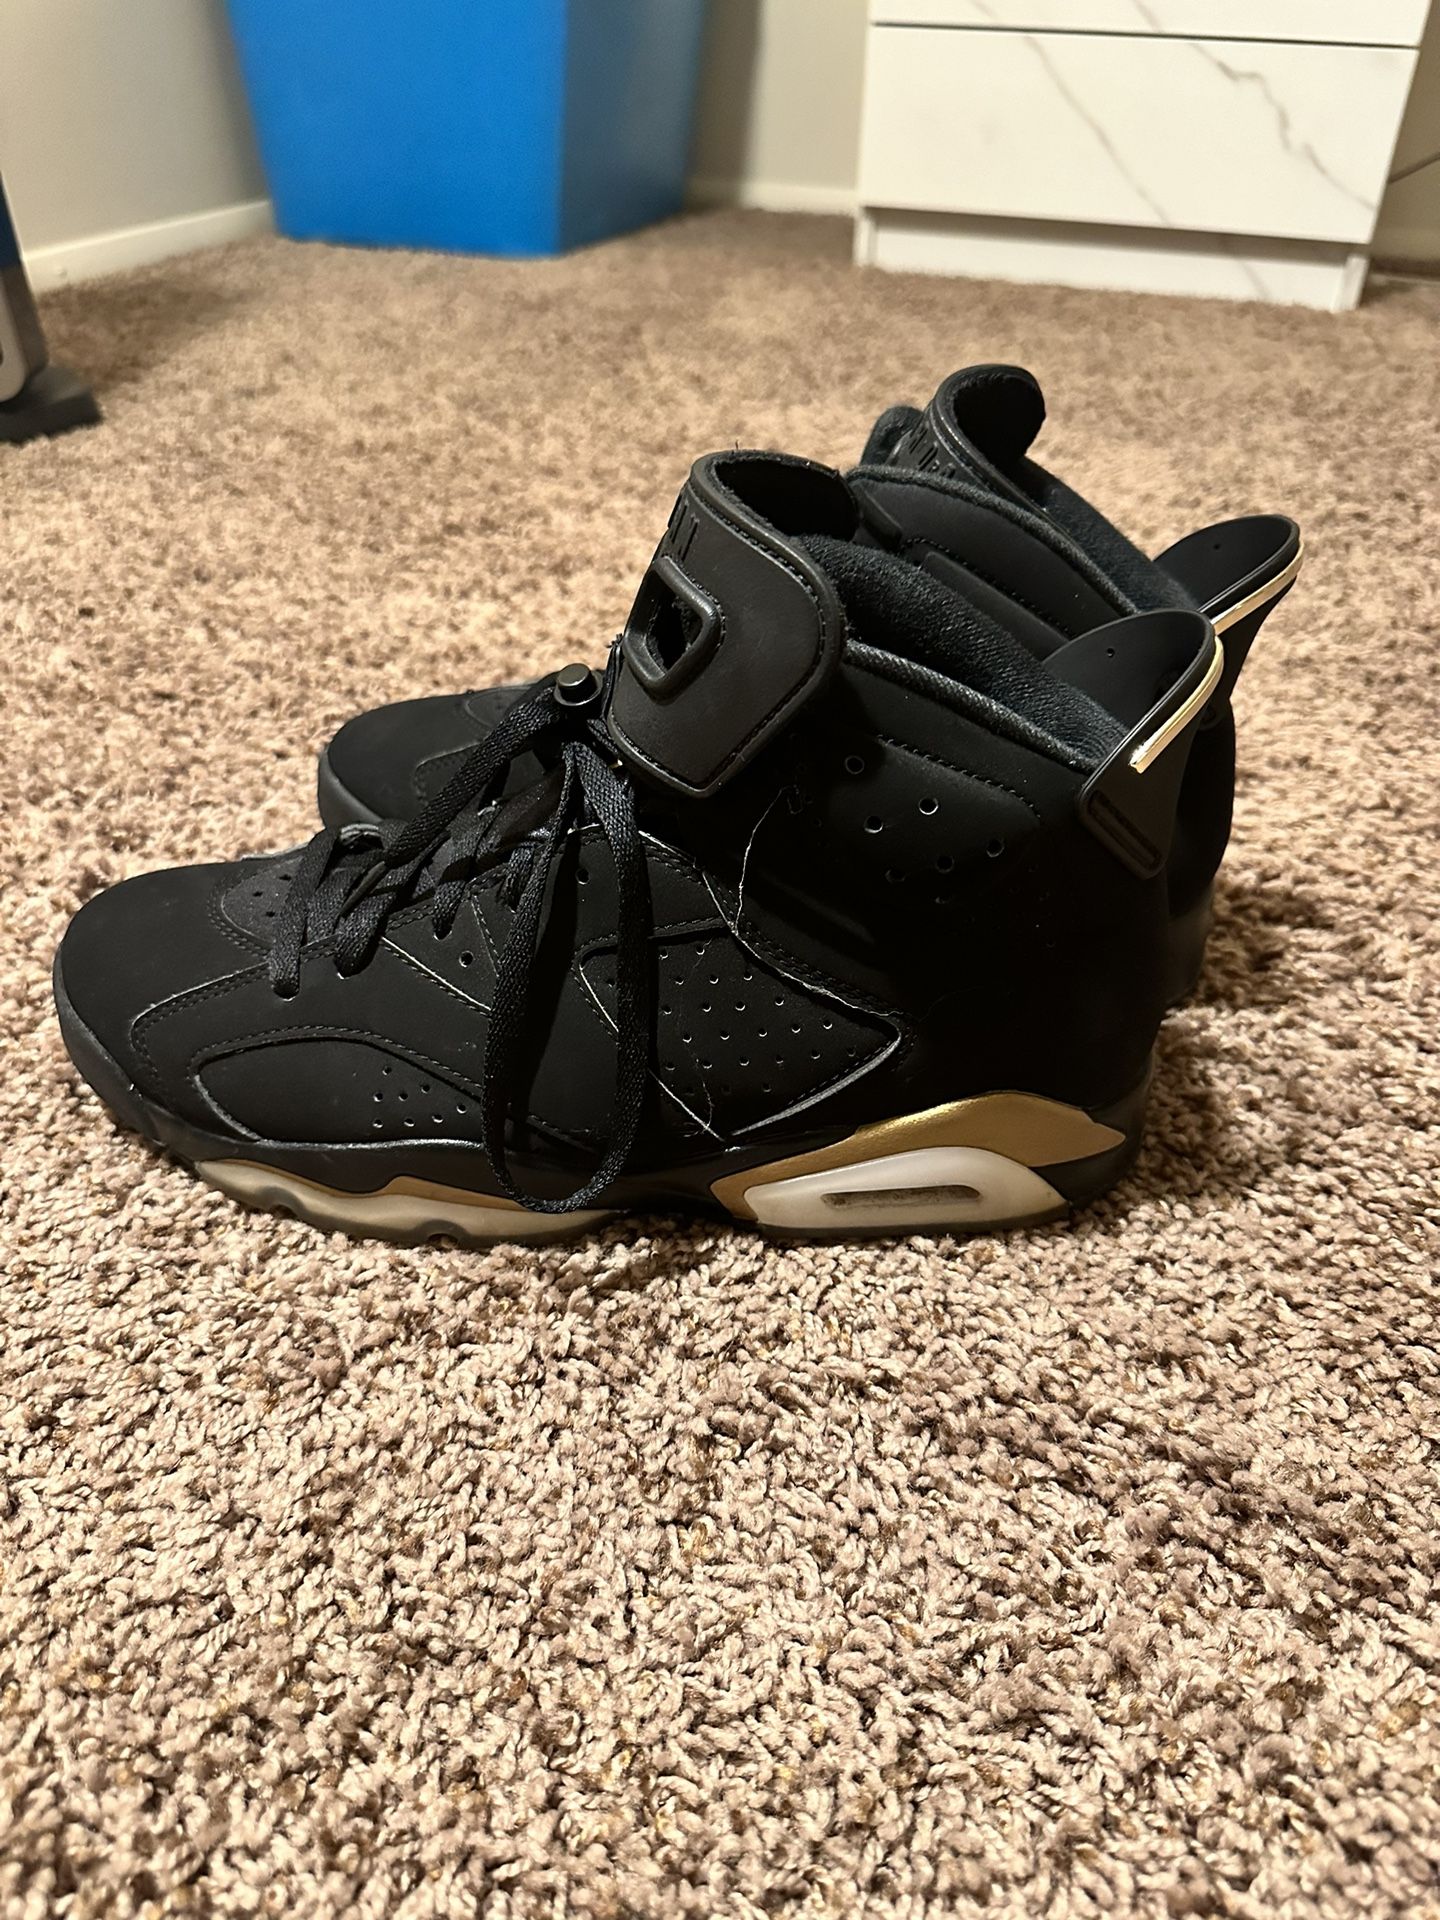 Jordan 6 Retro DMP Size 9.5